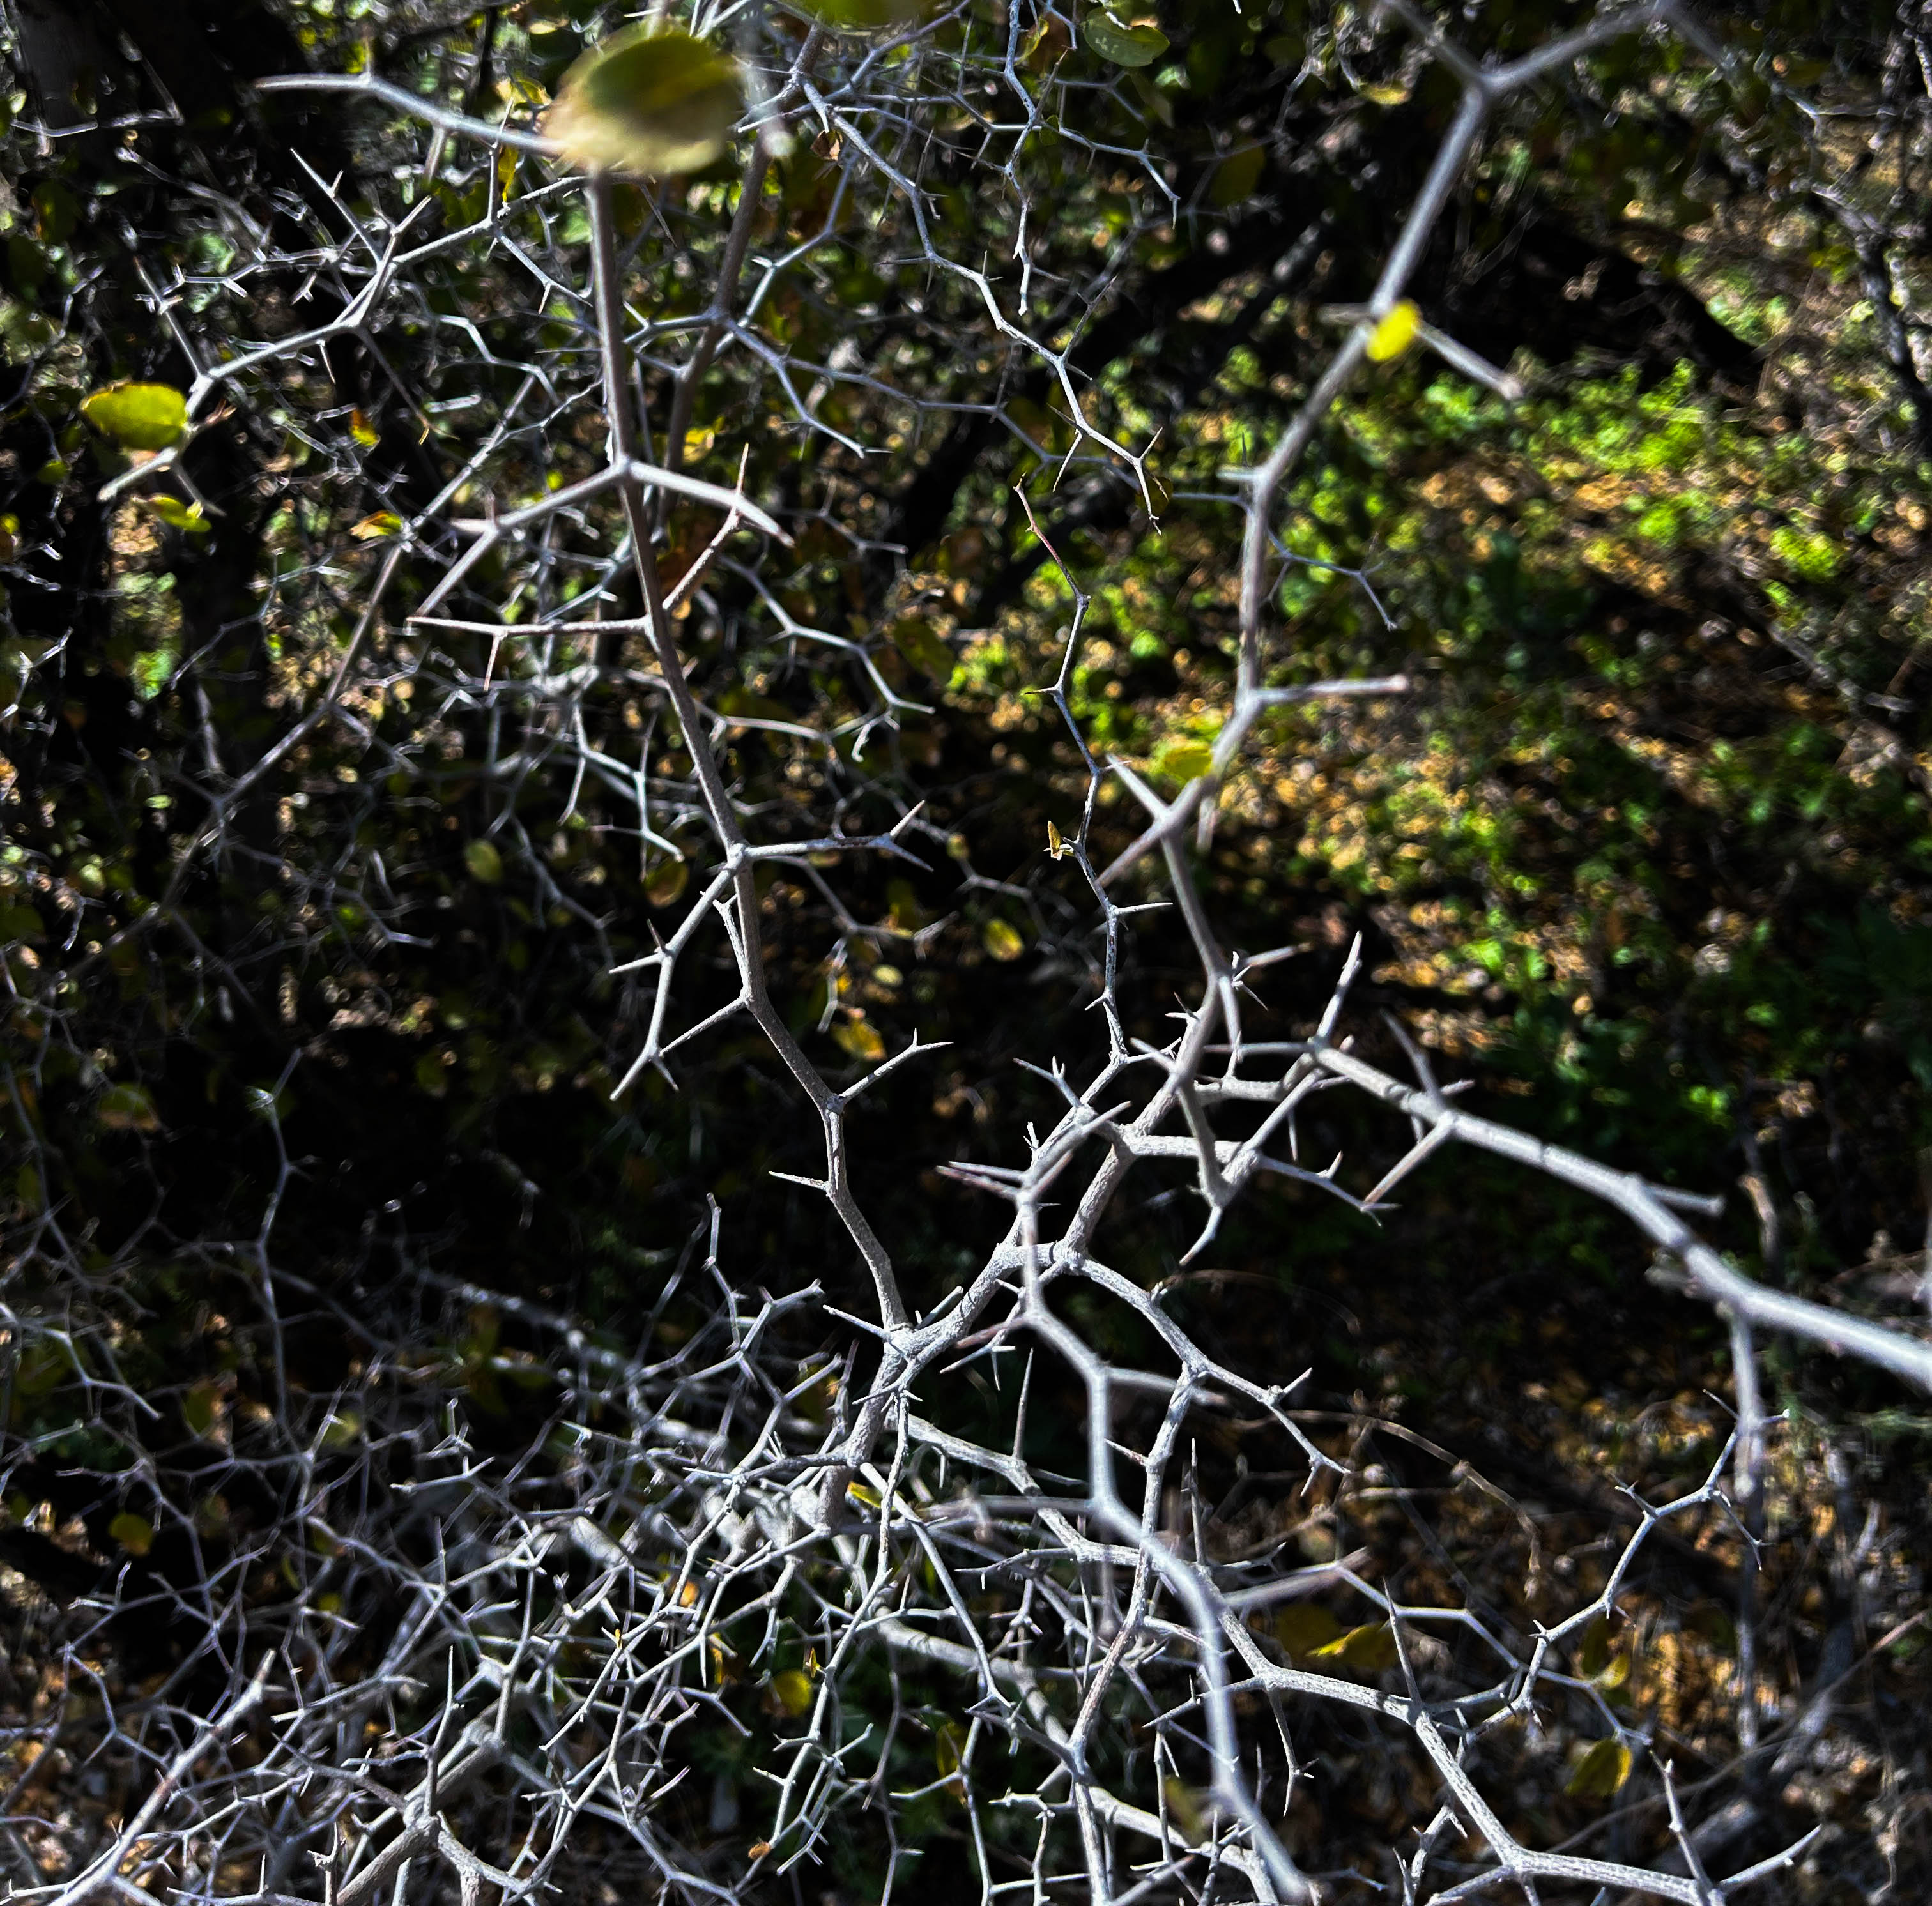 Photo by Josie Mazerski  |  Close up picture of a Wire-netting bush